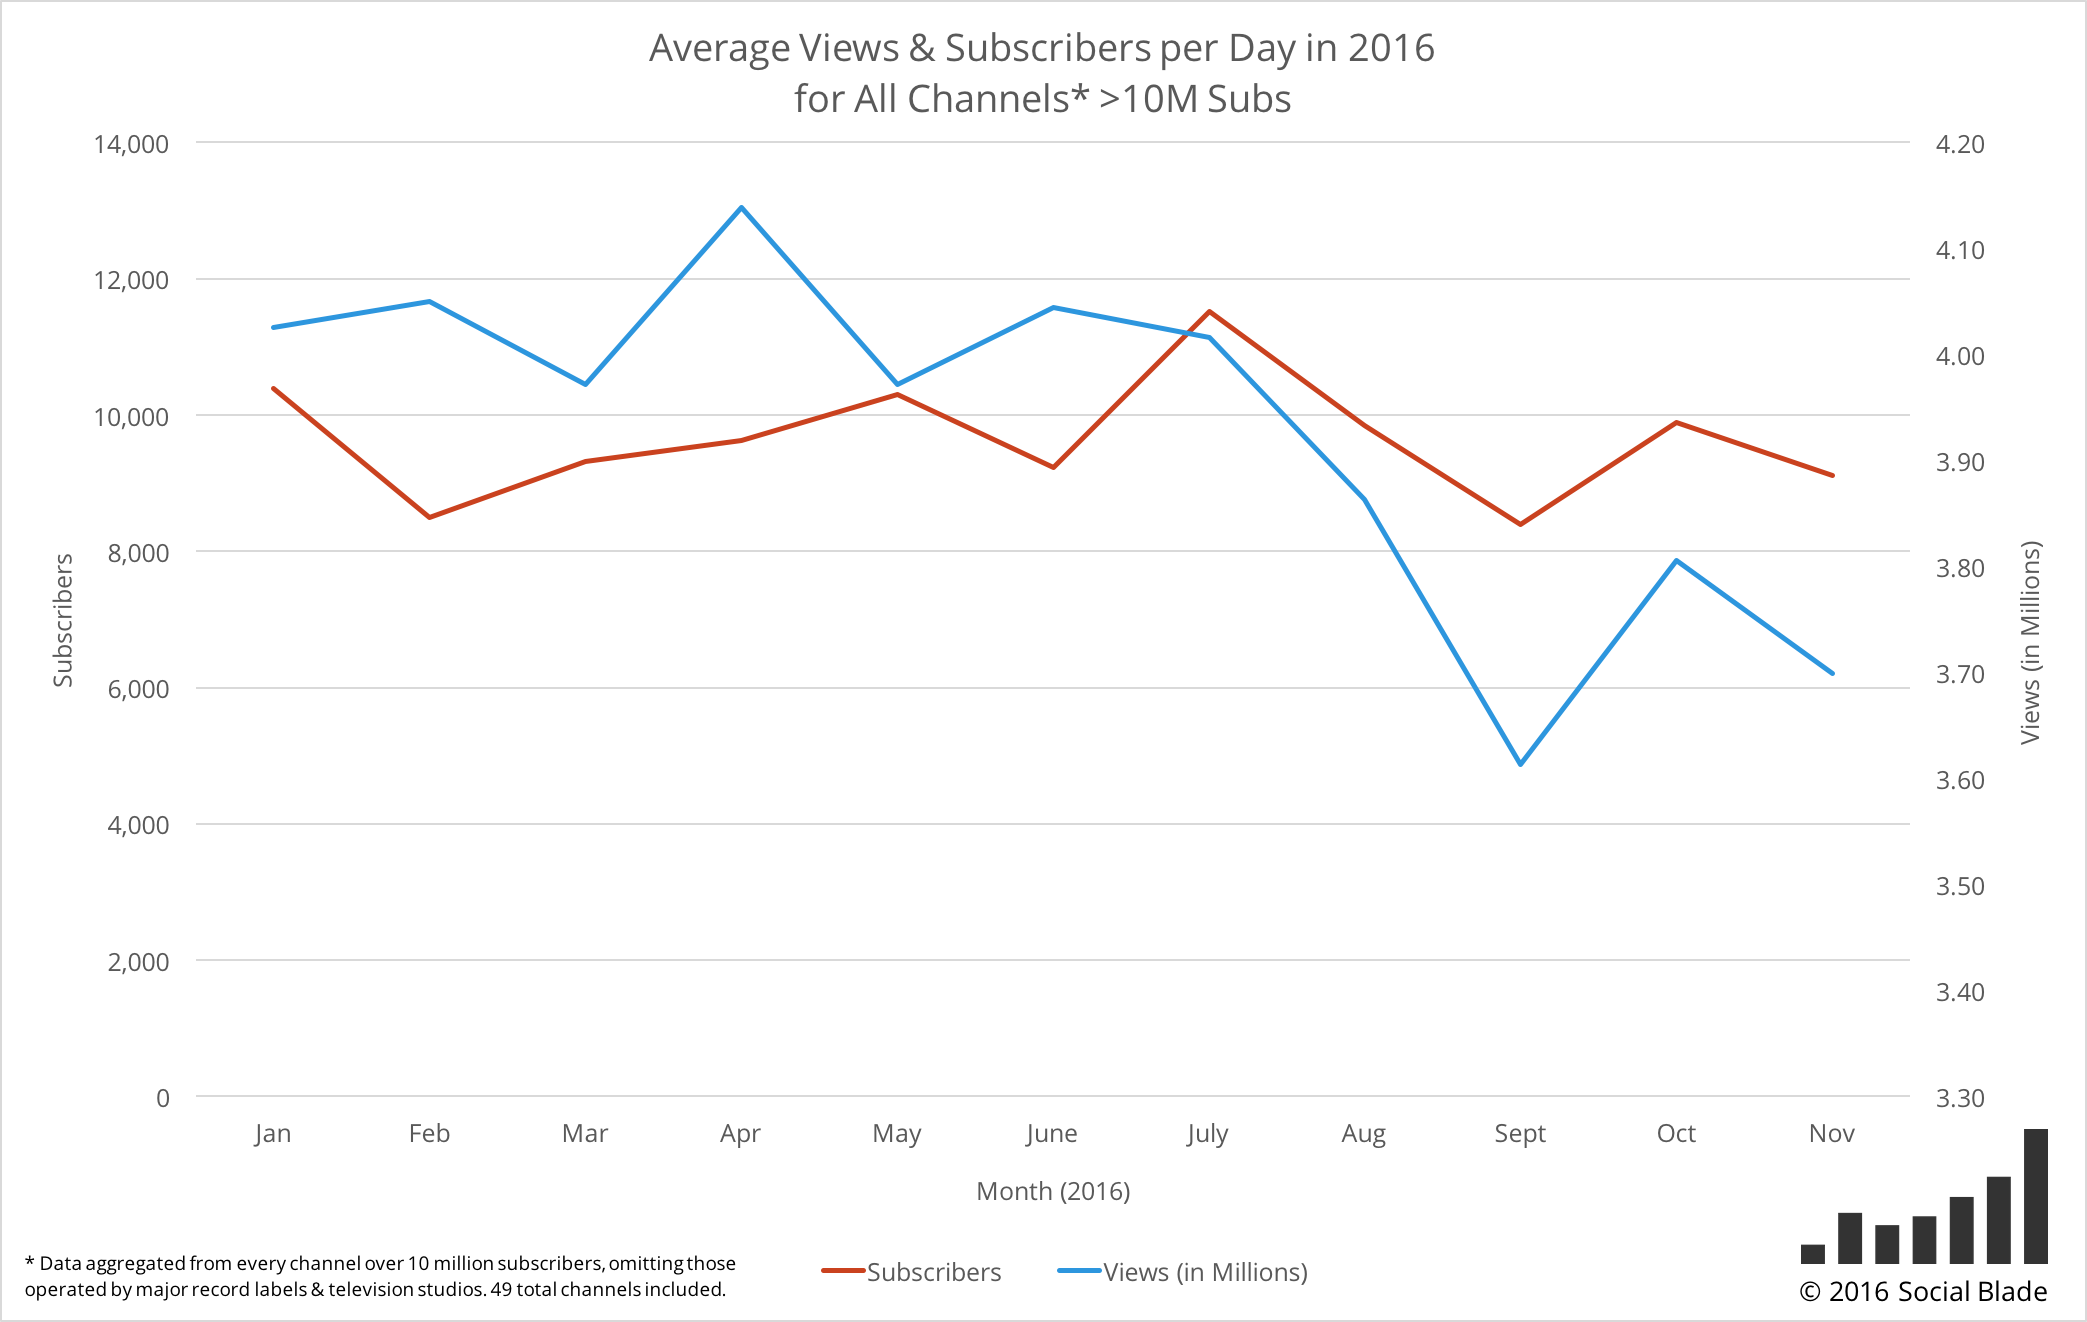 YouTube Views Are Down, Analysis Says